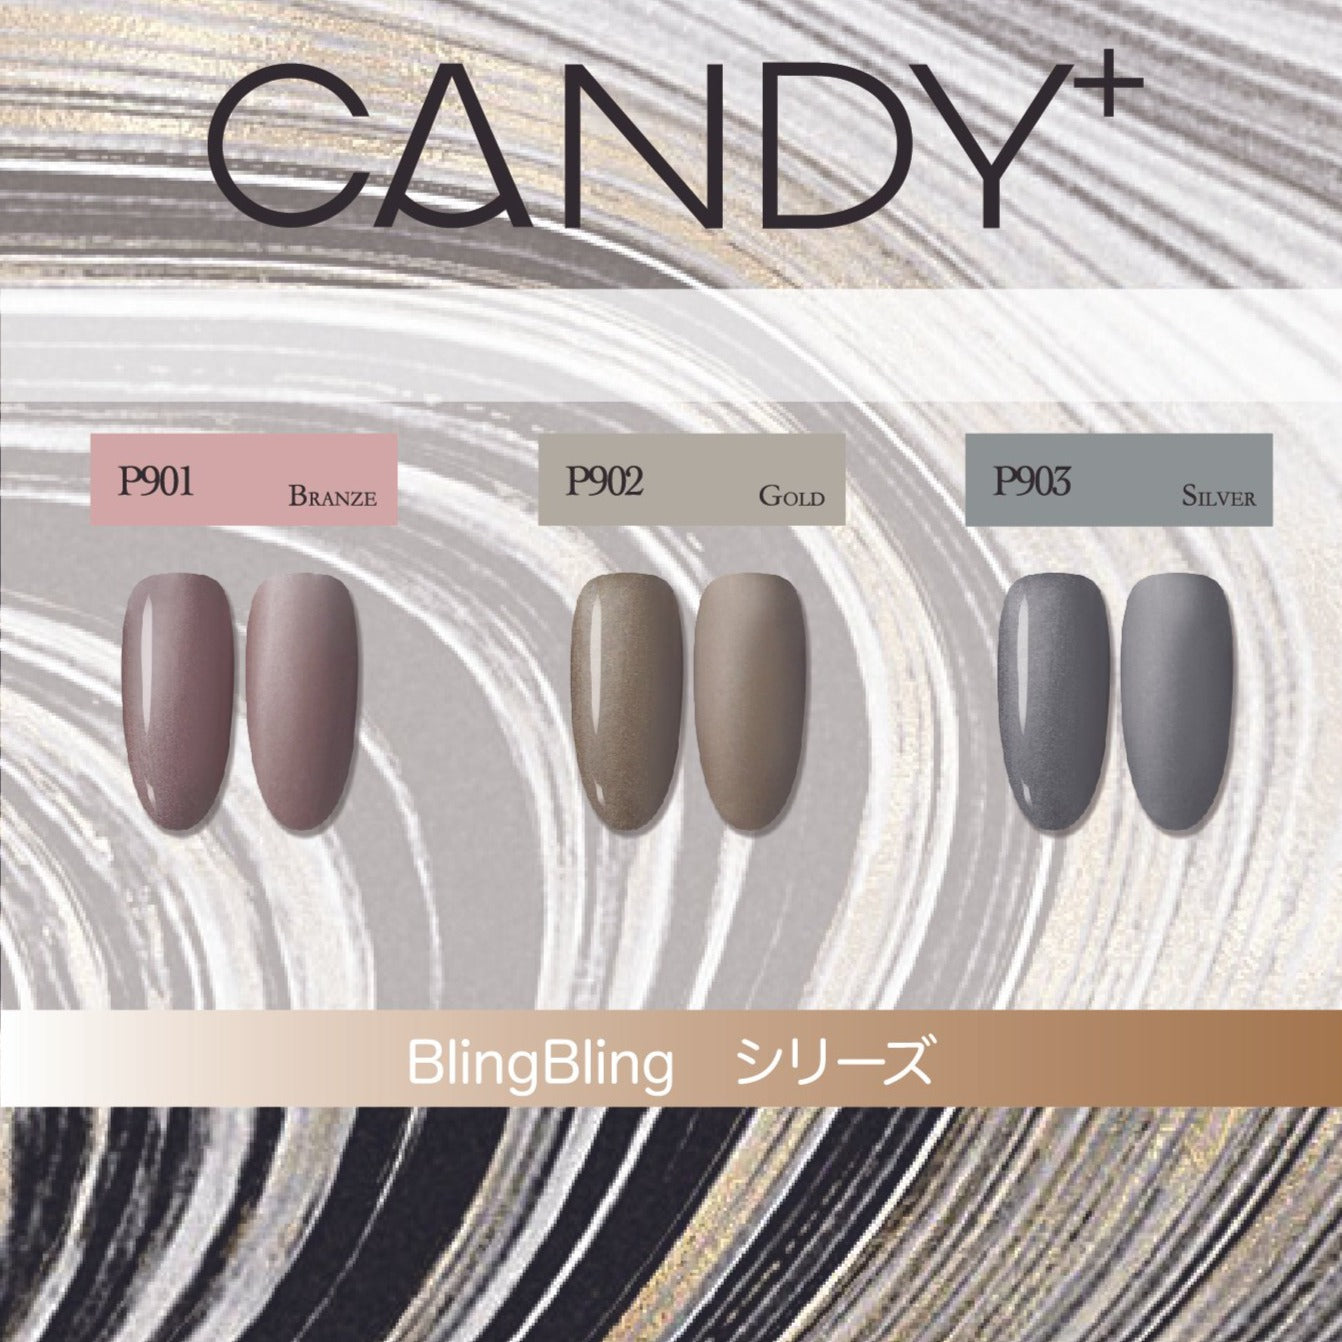 CANDY+ Bling Bling Series - 3 Colour Gel